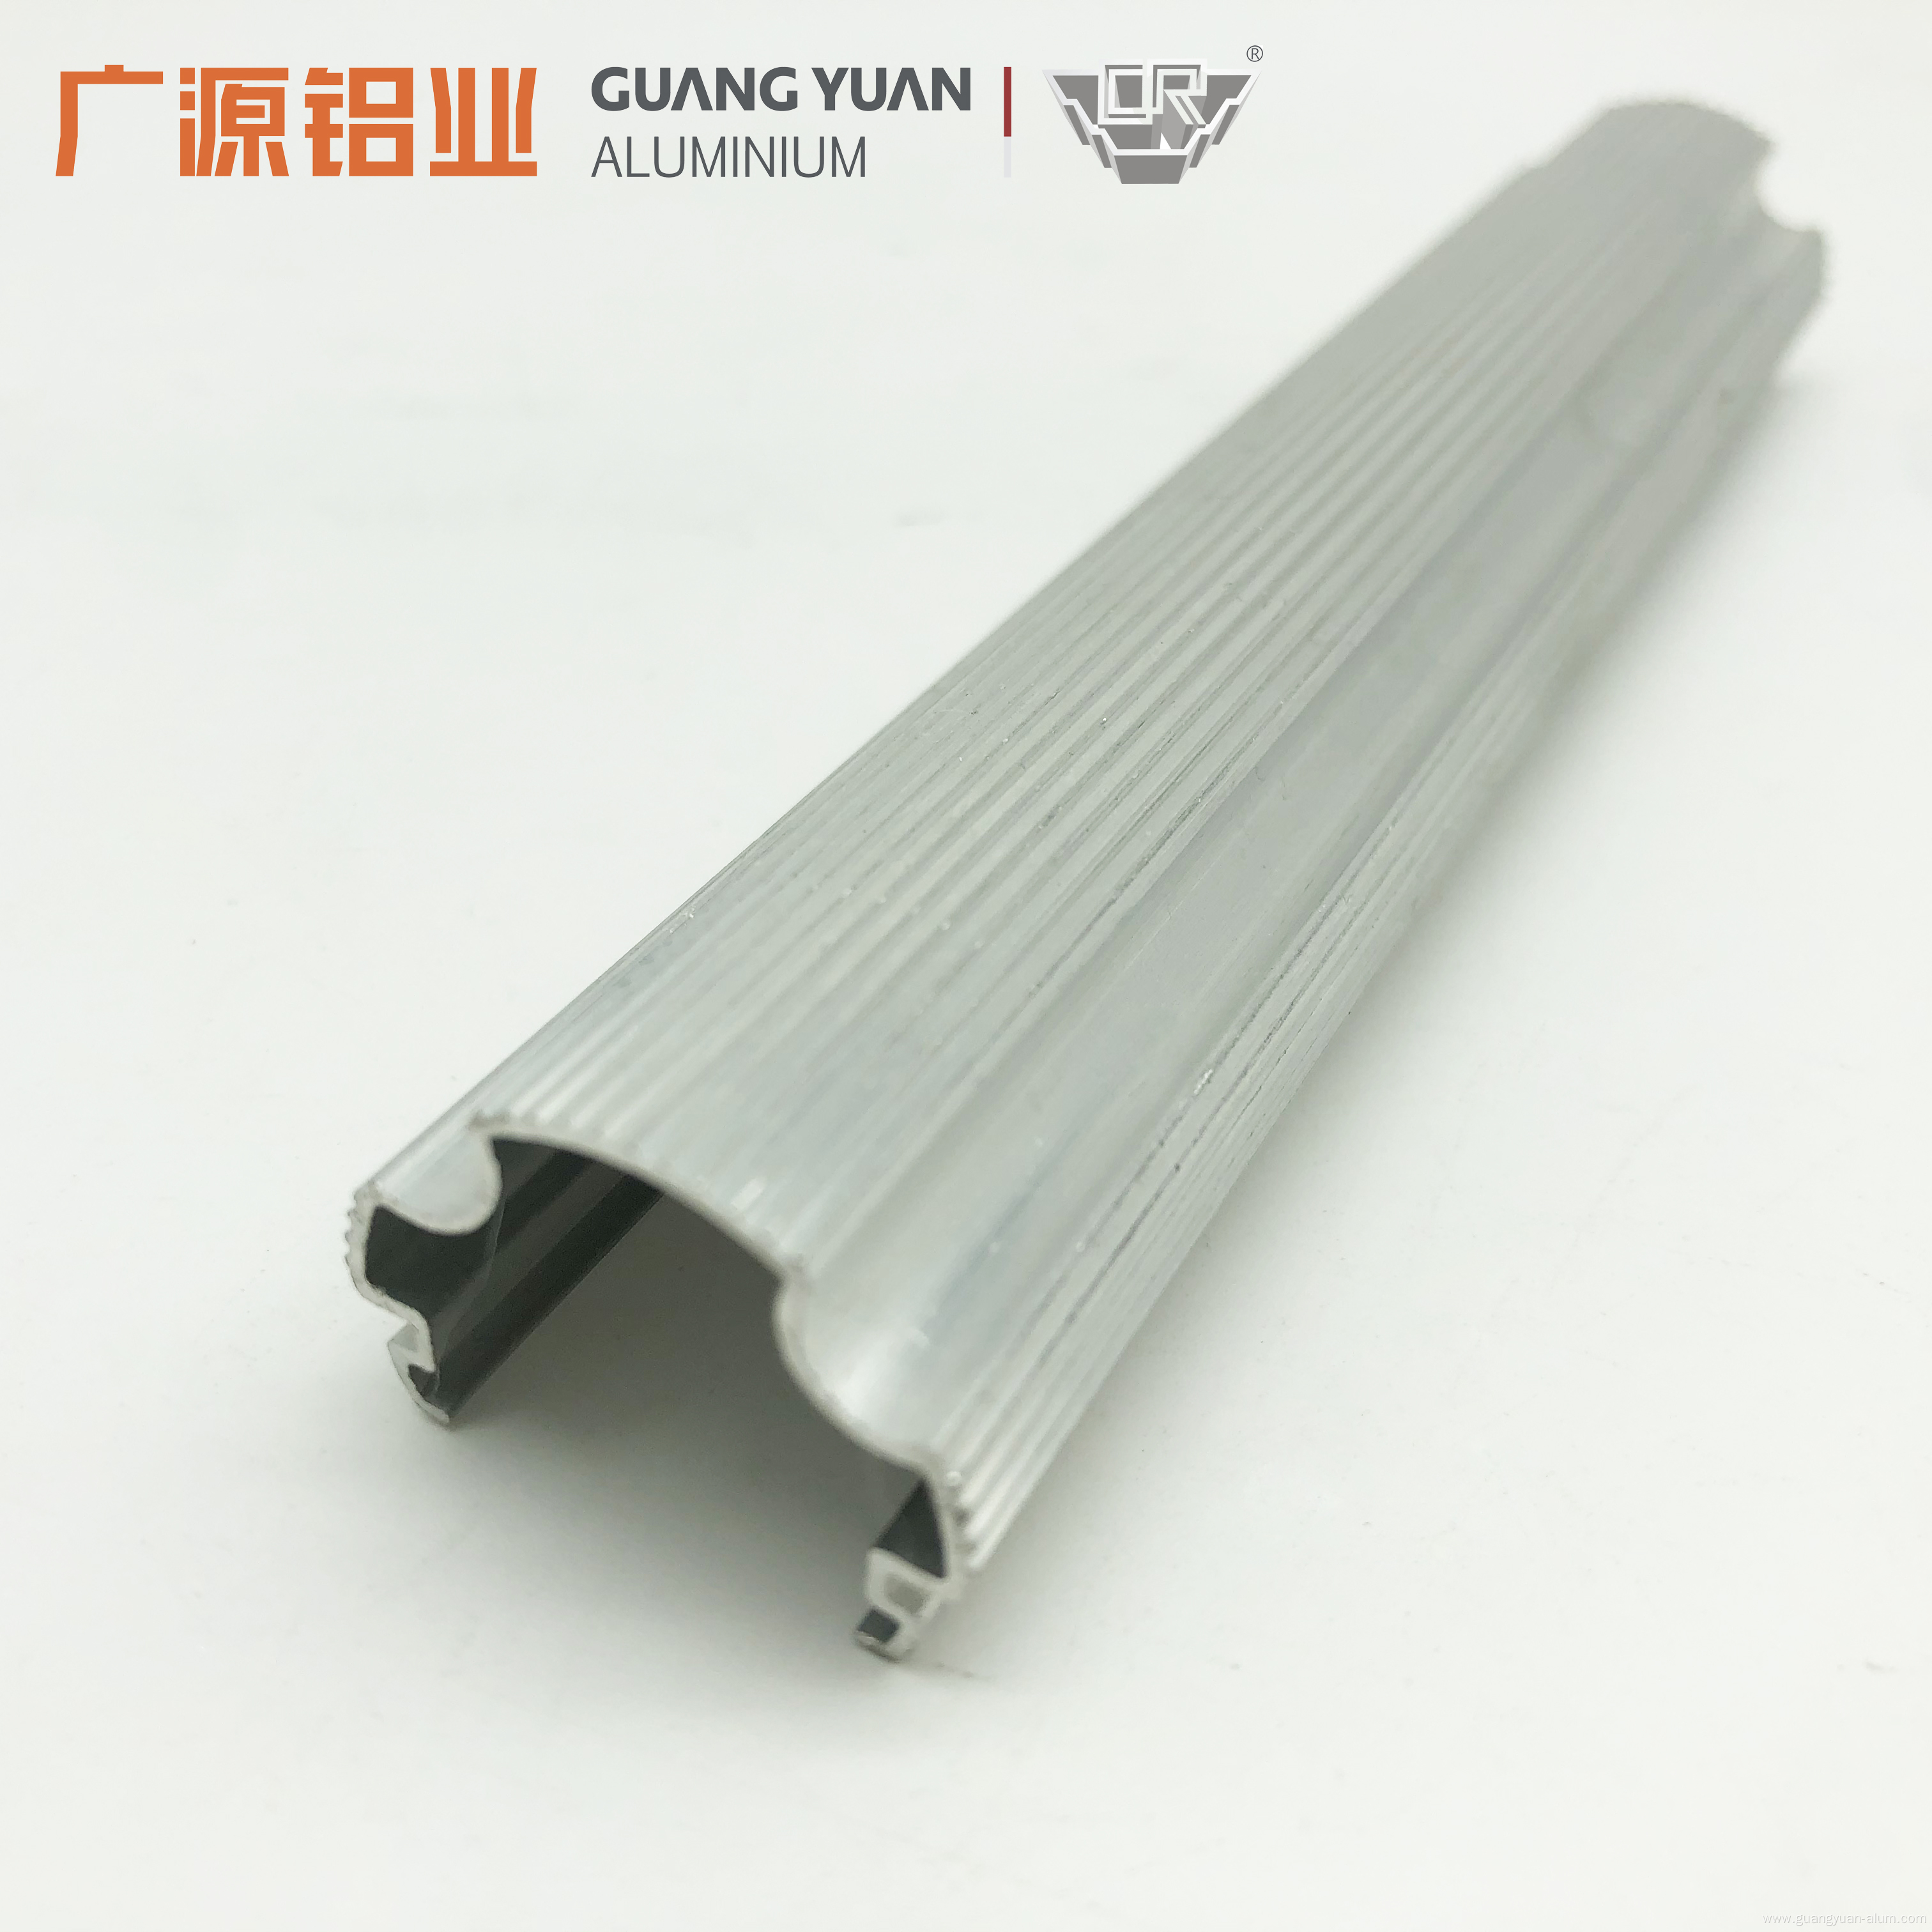 LED Aluminium Profile LED Strip Light Aluminium Profile